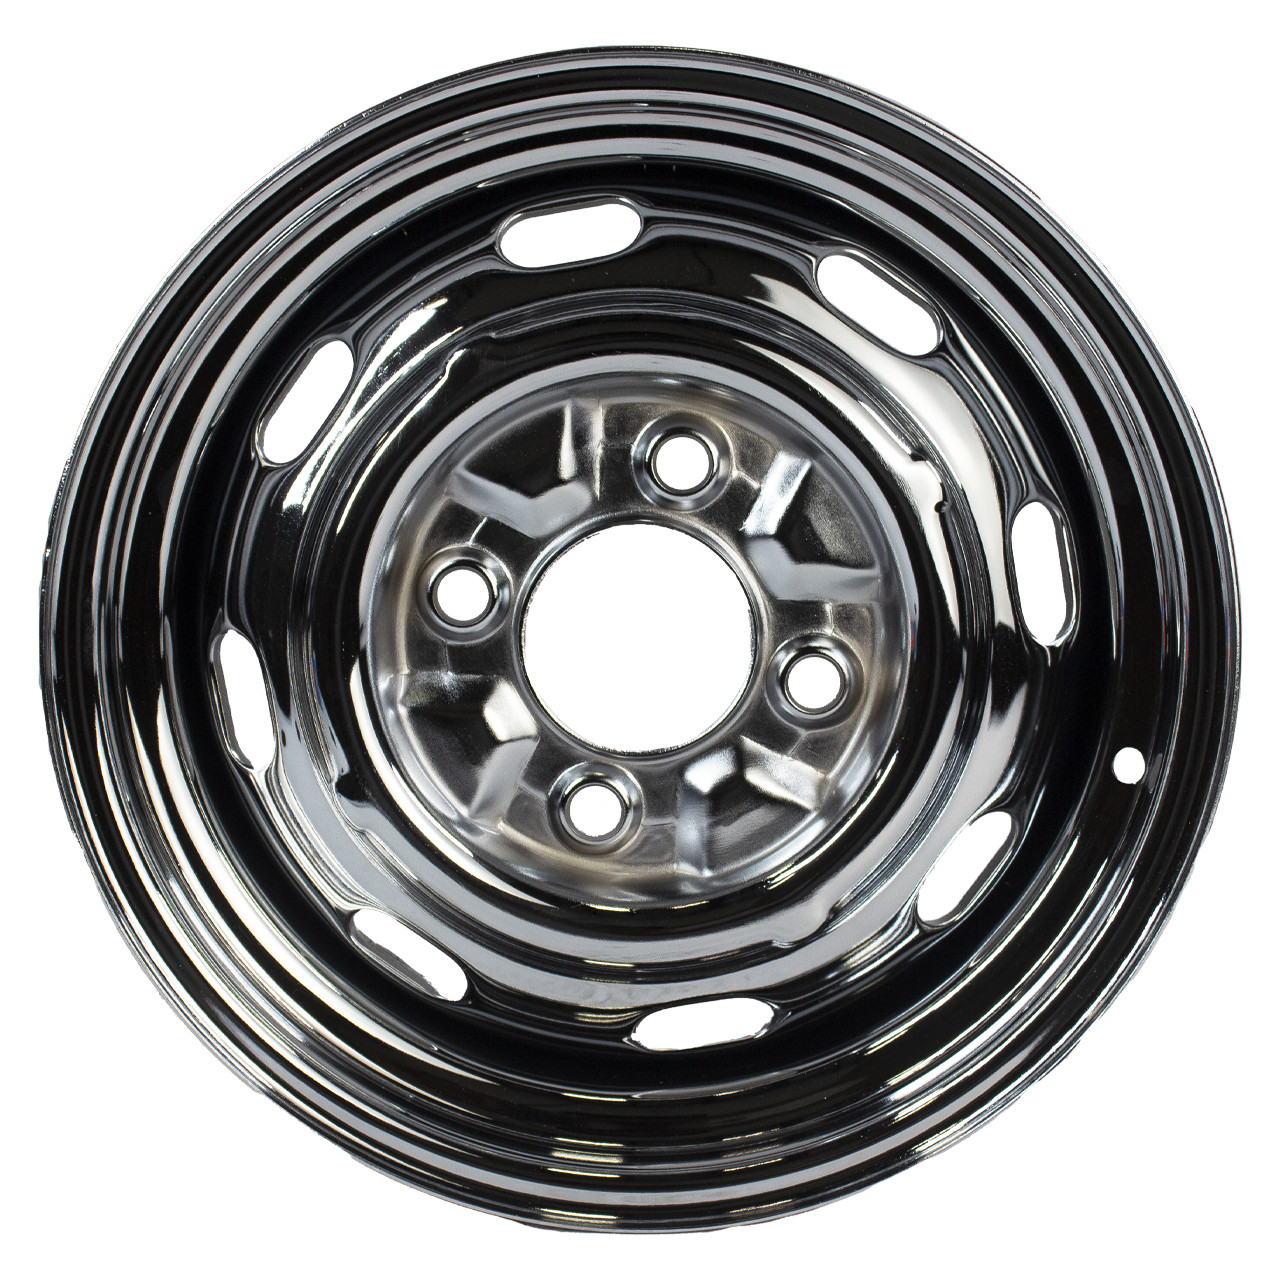 Universal Round Steel Wheel Ring 15 - 3 Tab